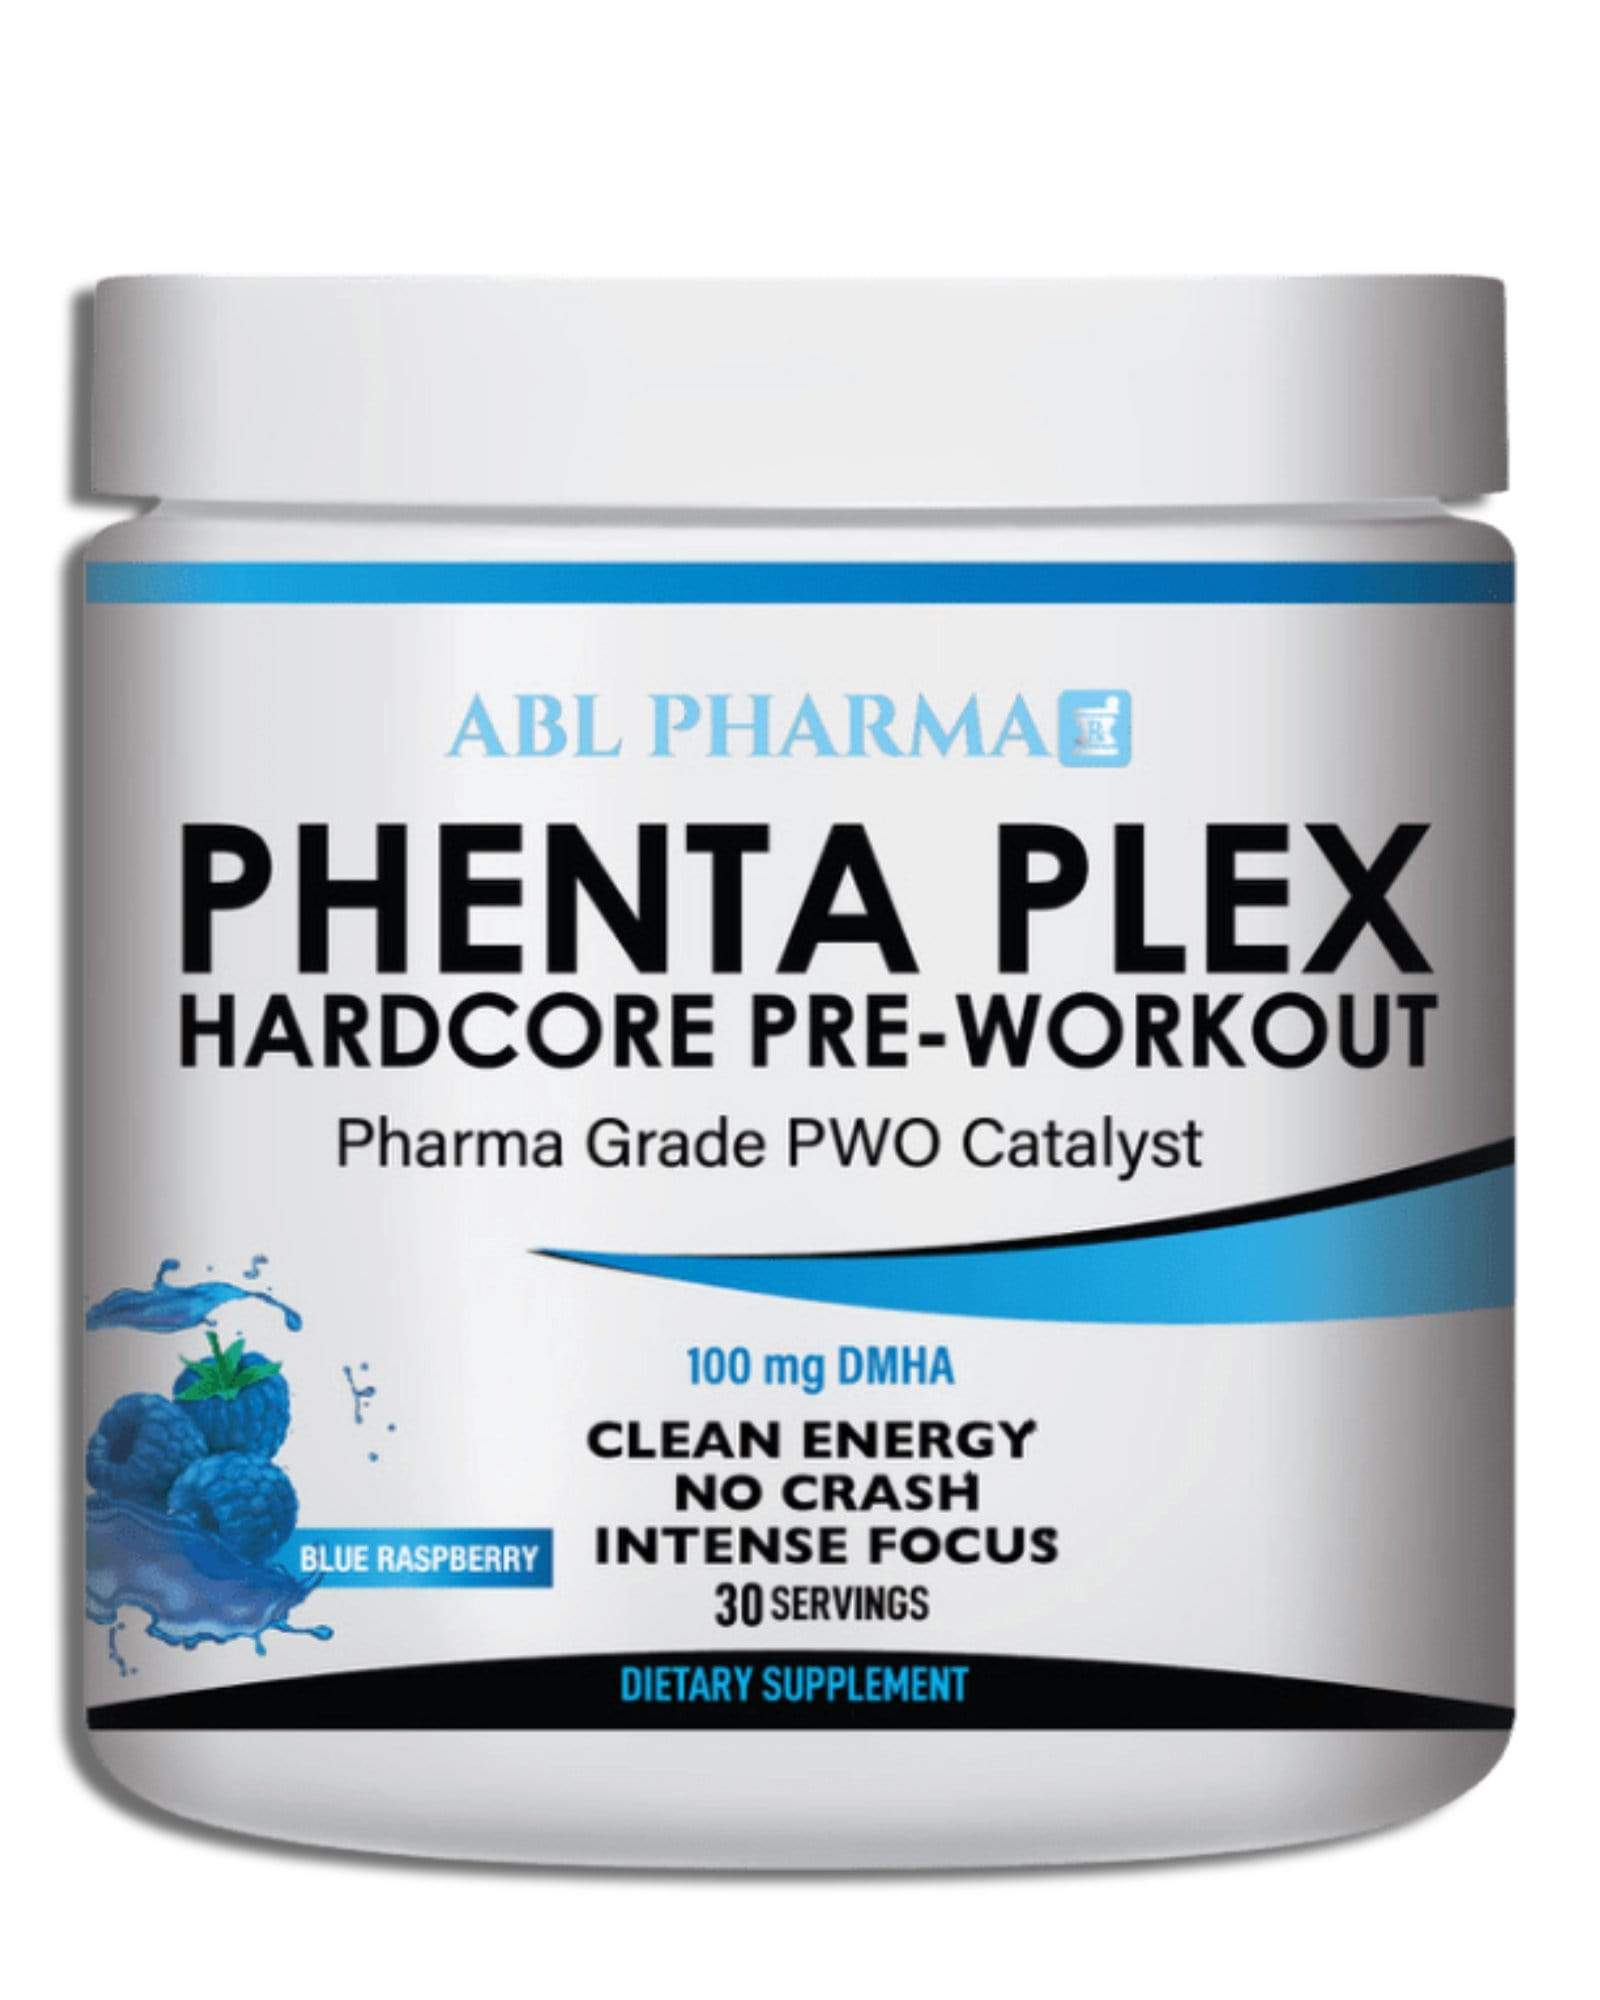 Nutracore Supplements ABL Pharma Phenta Plex Hardcore Pre-Workout